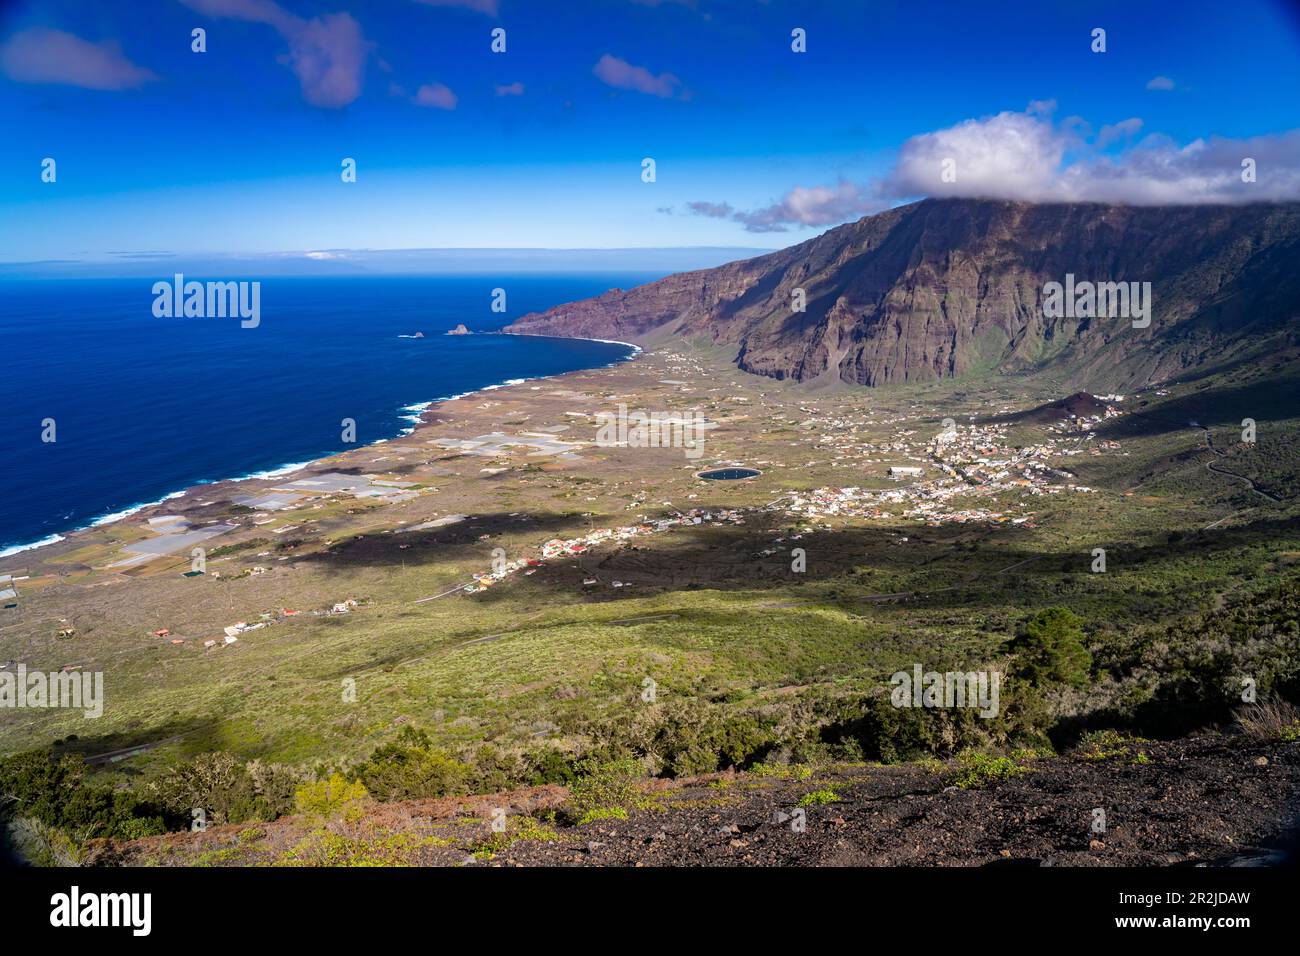 Canary Islands - Wikipedia